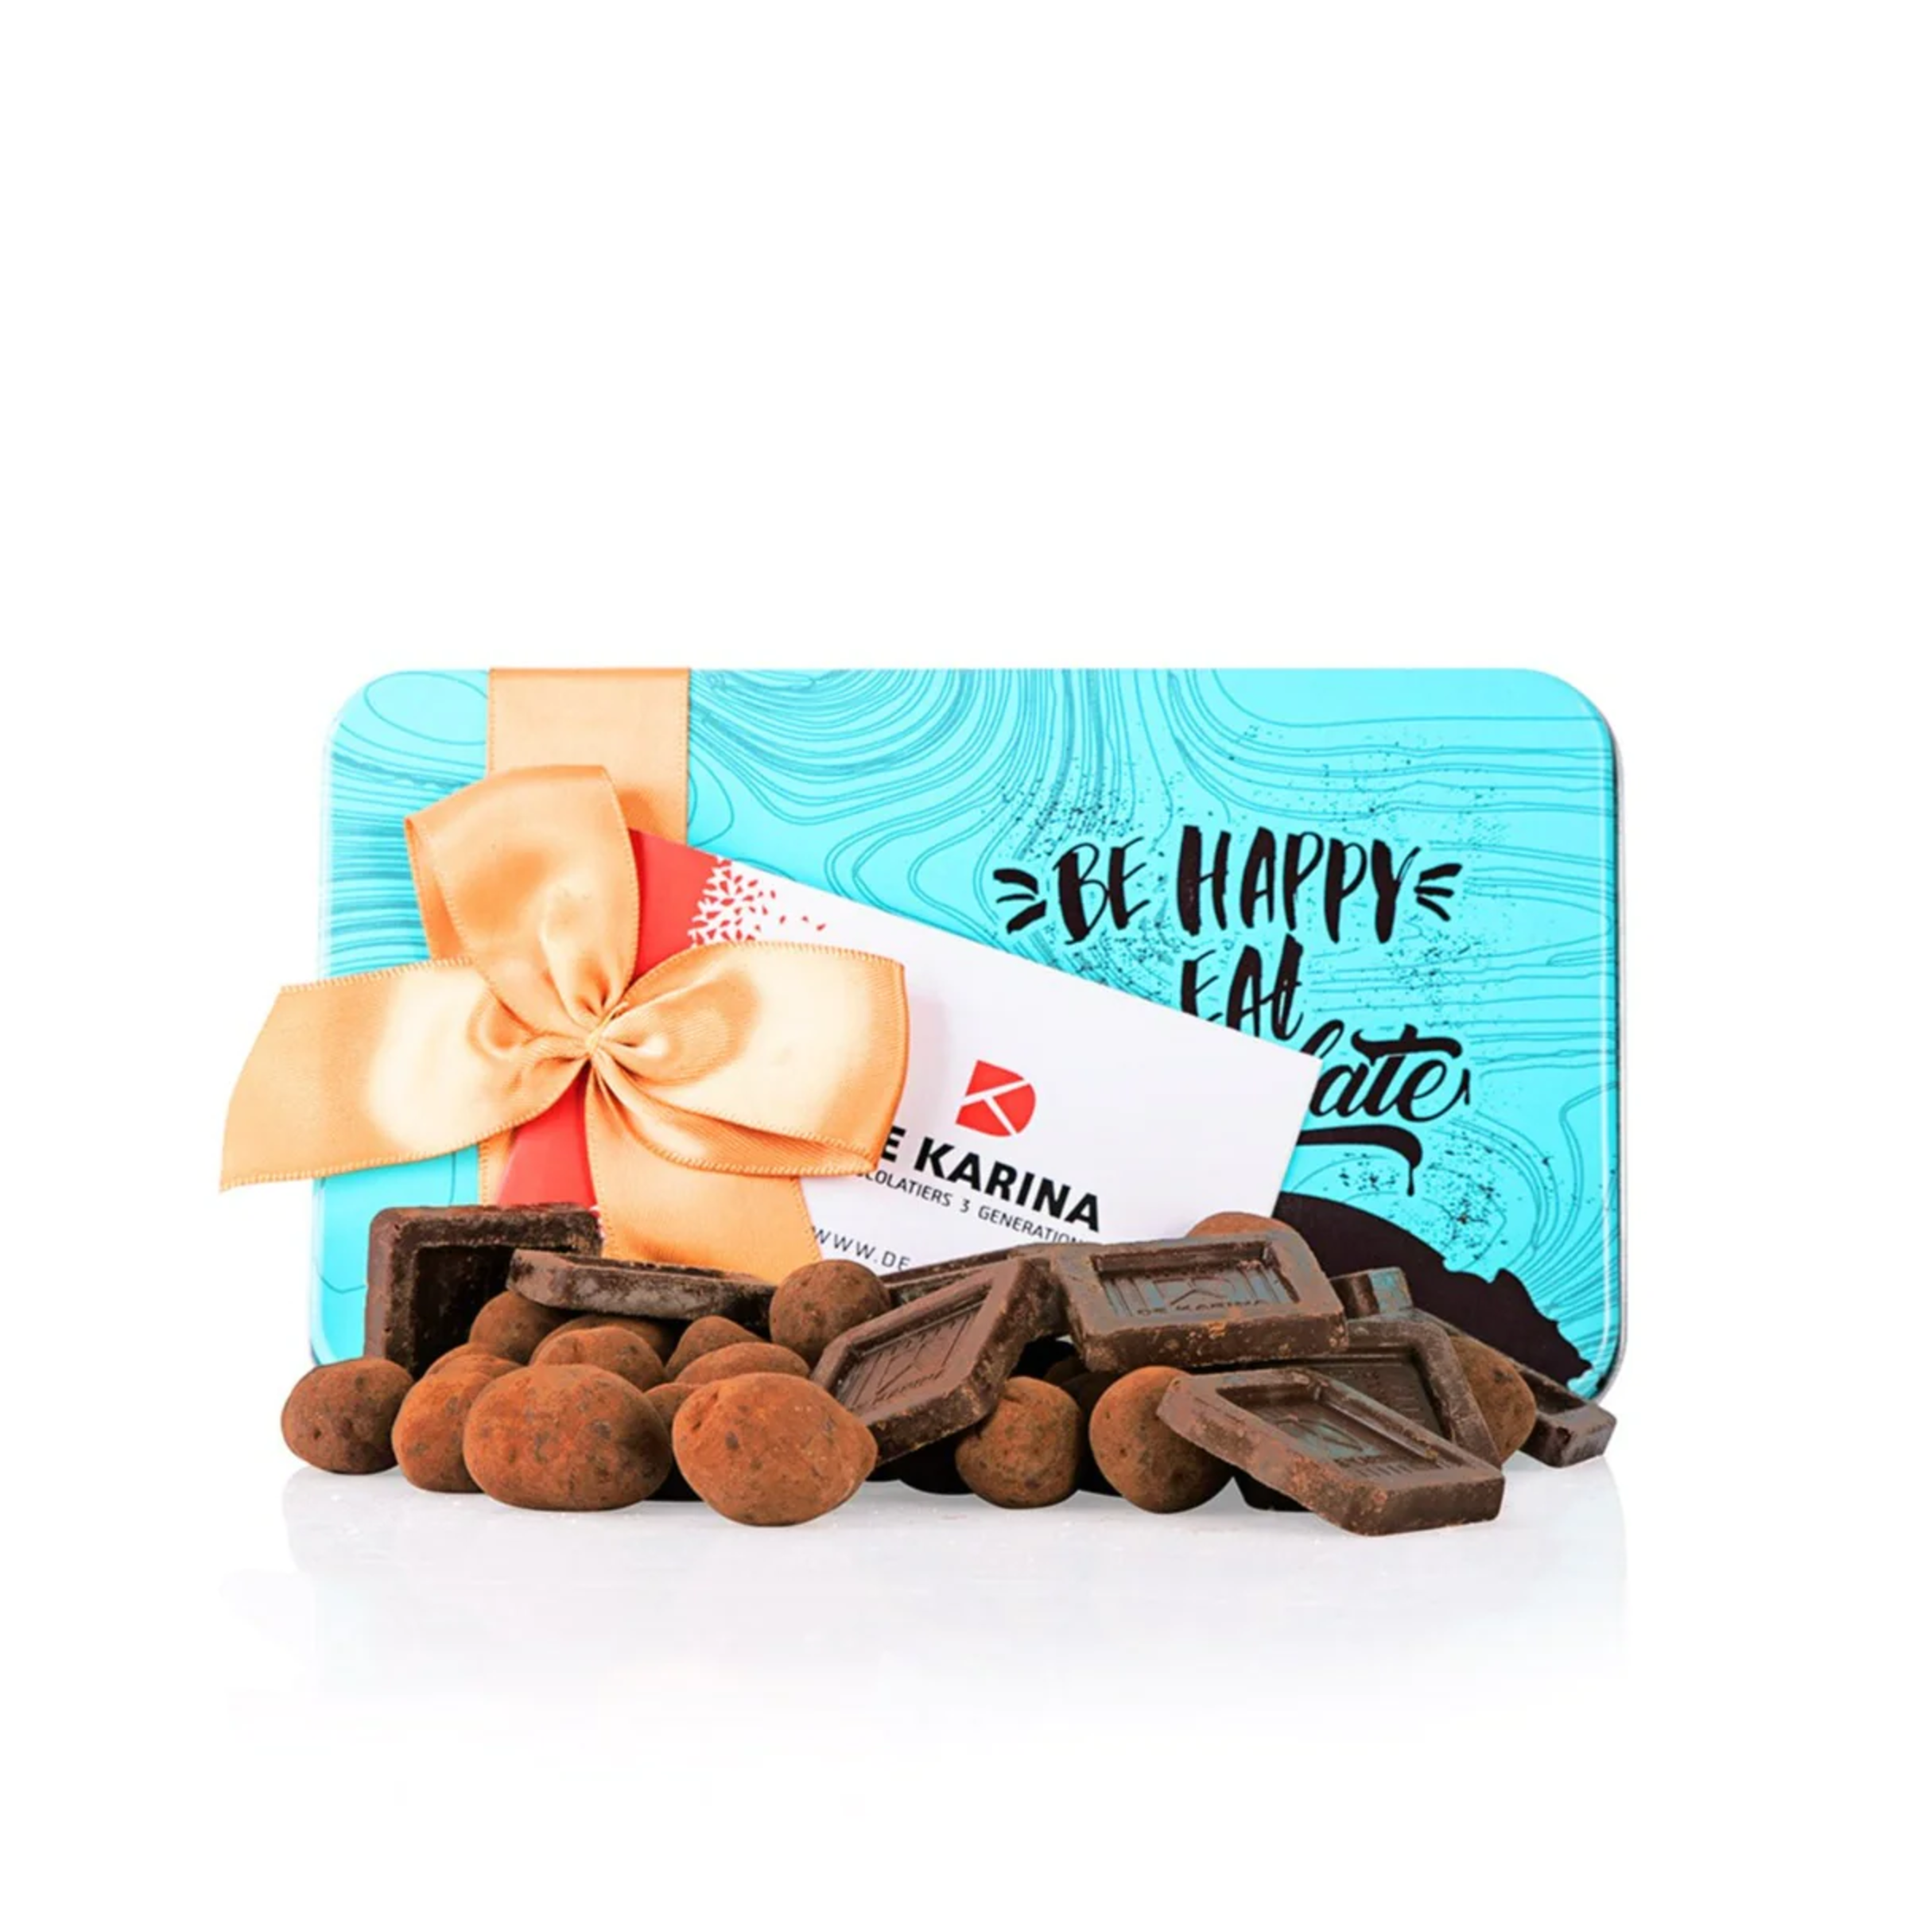 De Karina - Duet box combines 2 types of fine chocolates